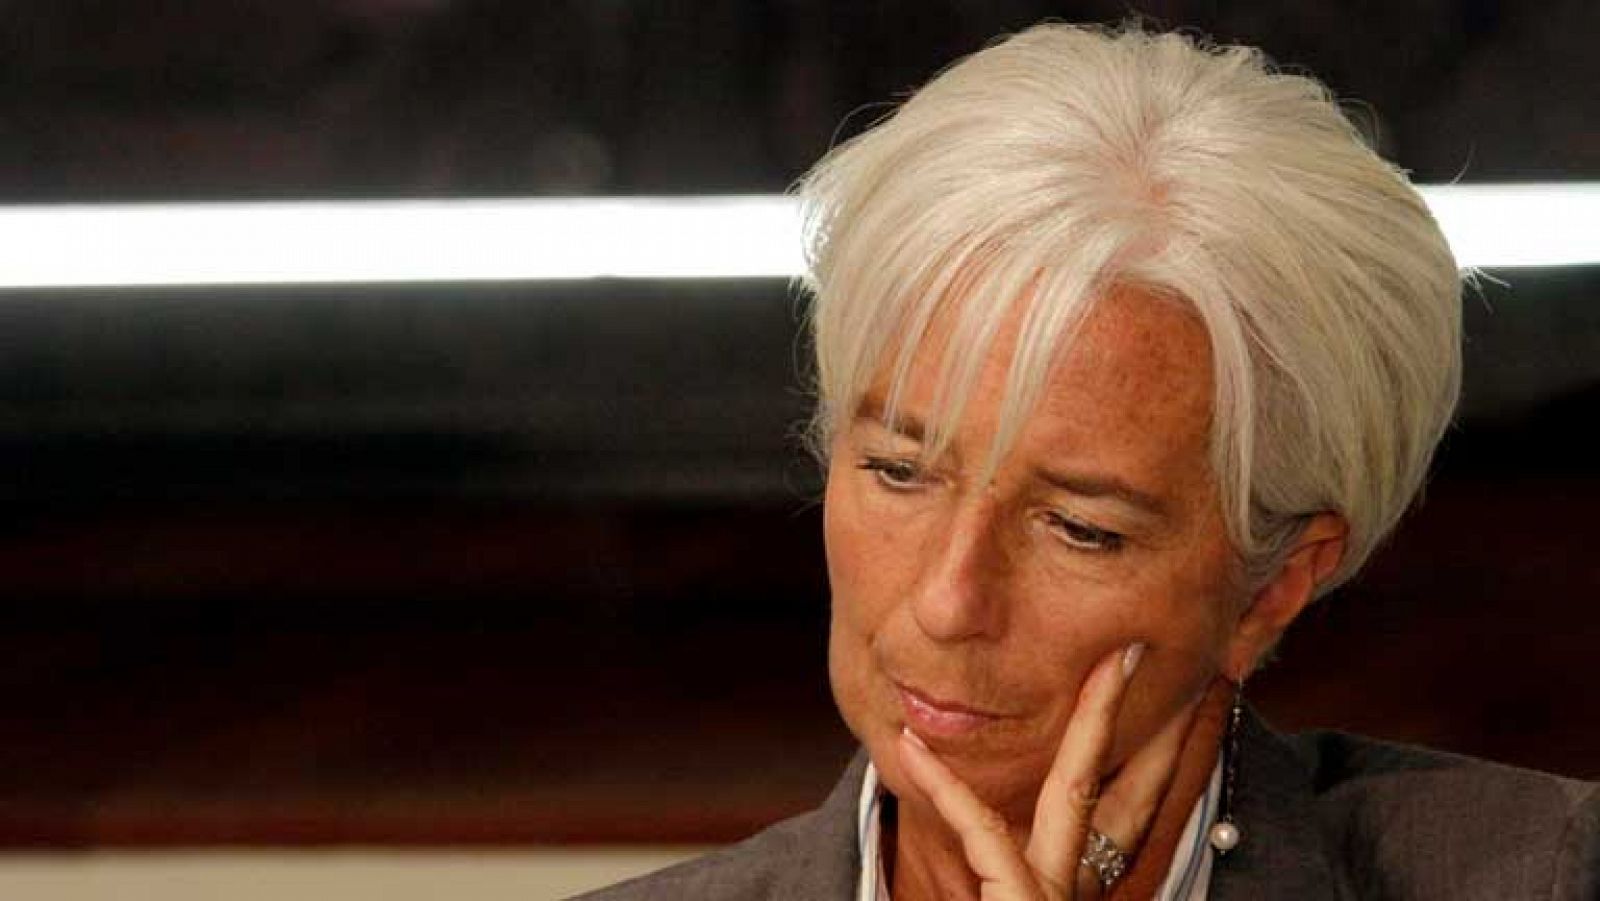 Telediario 1: El infome del FMI sobre España | RTVE Play